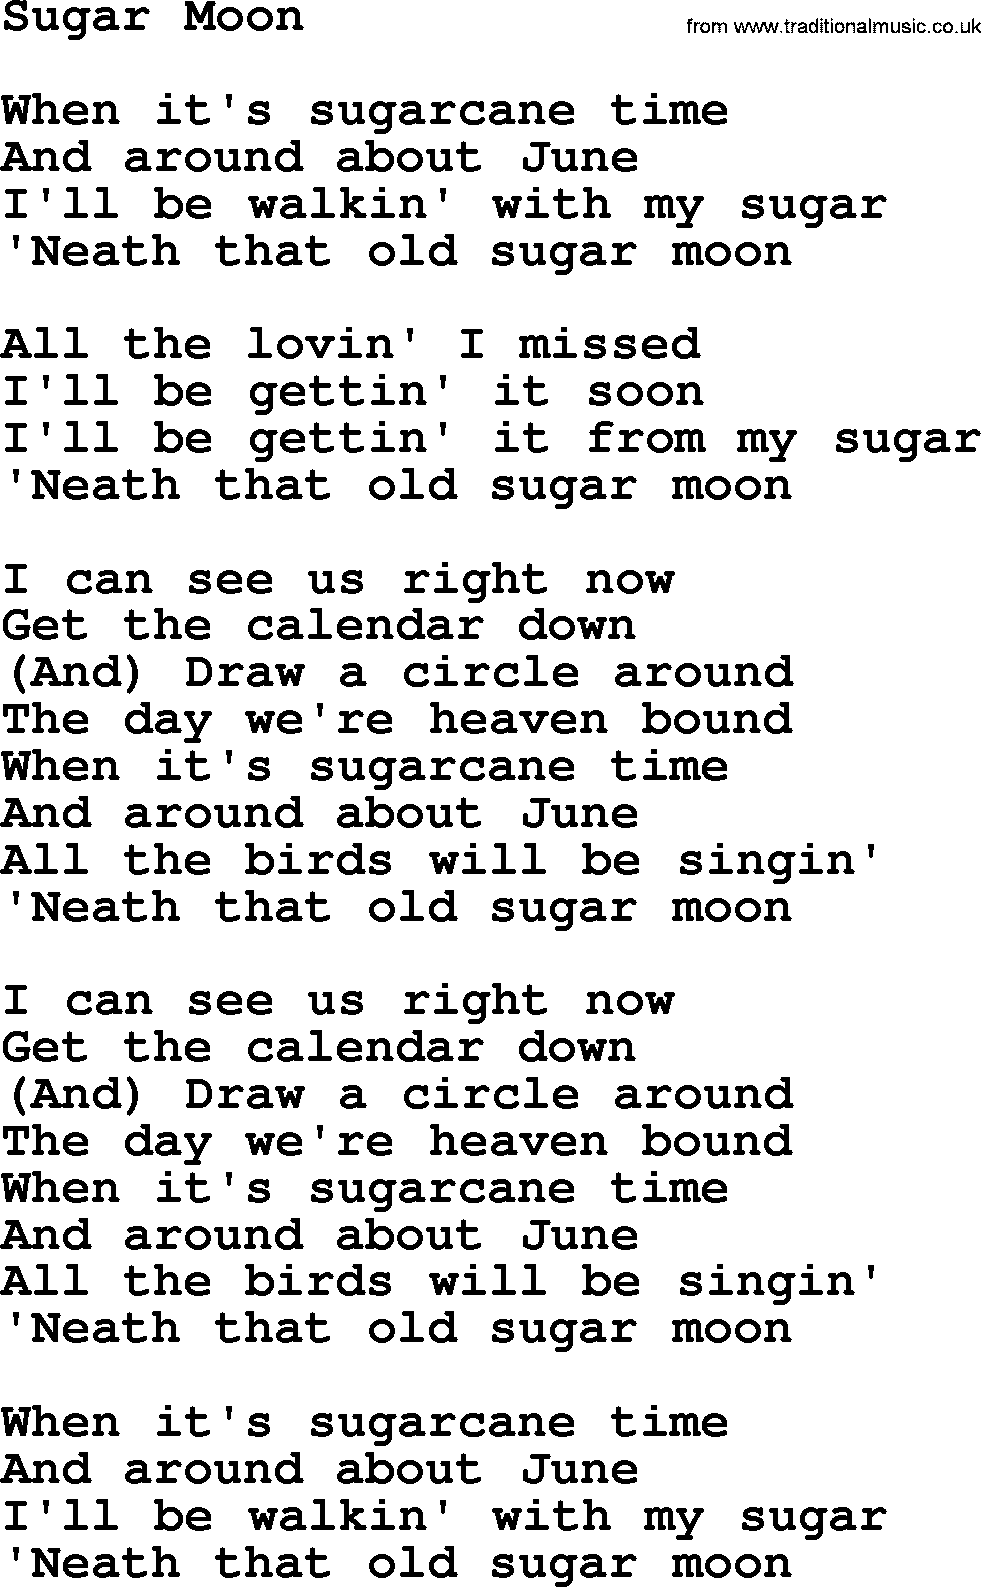 Willie Nelson song: Sugar Moon lyrics